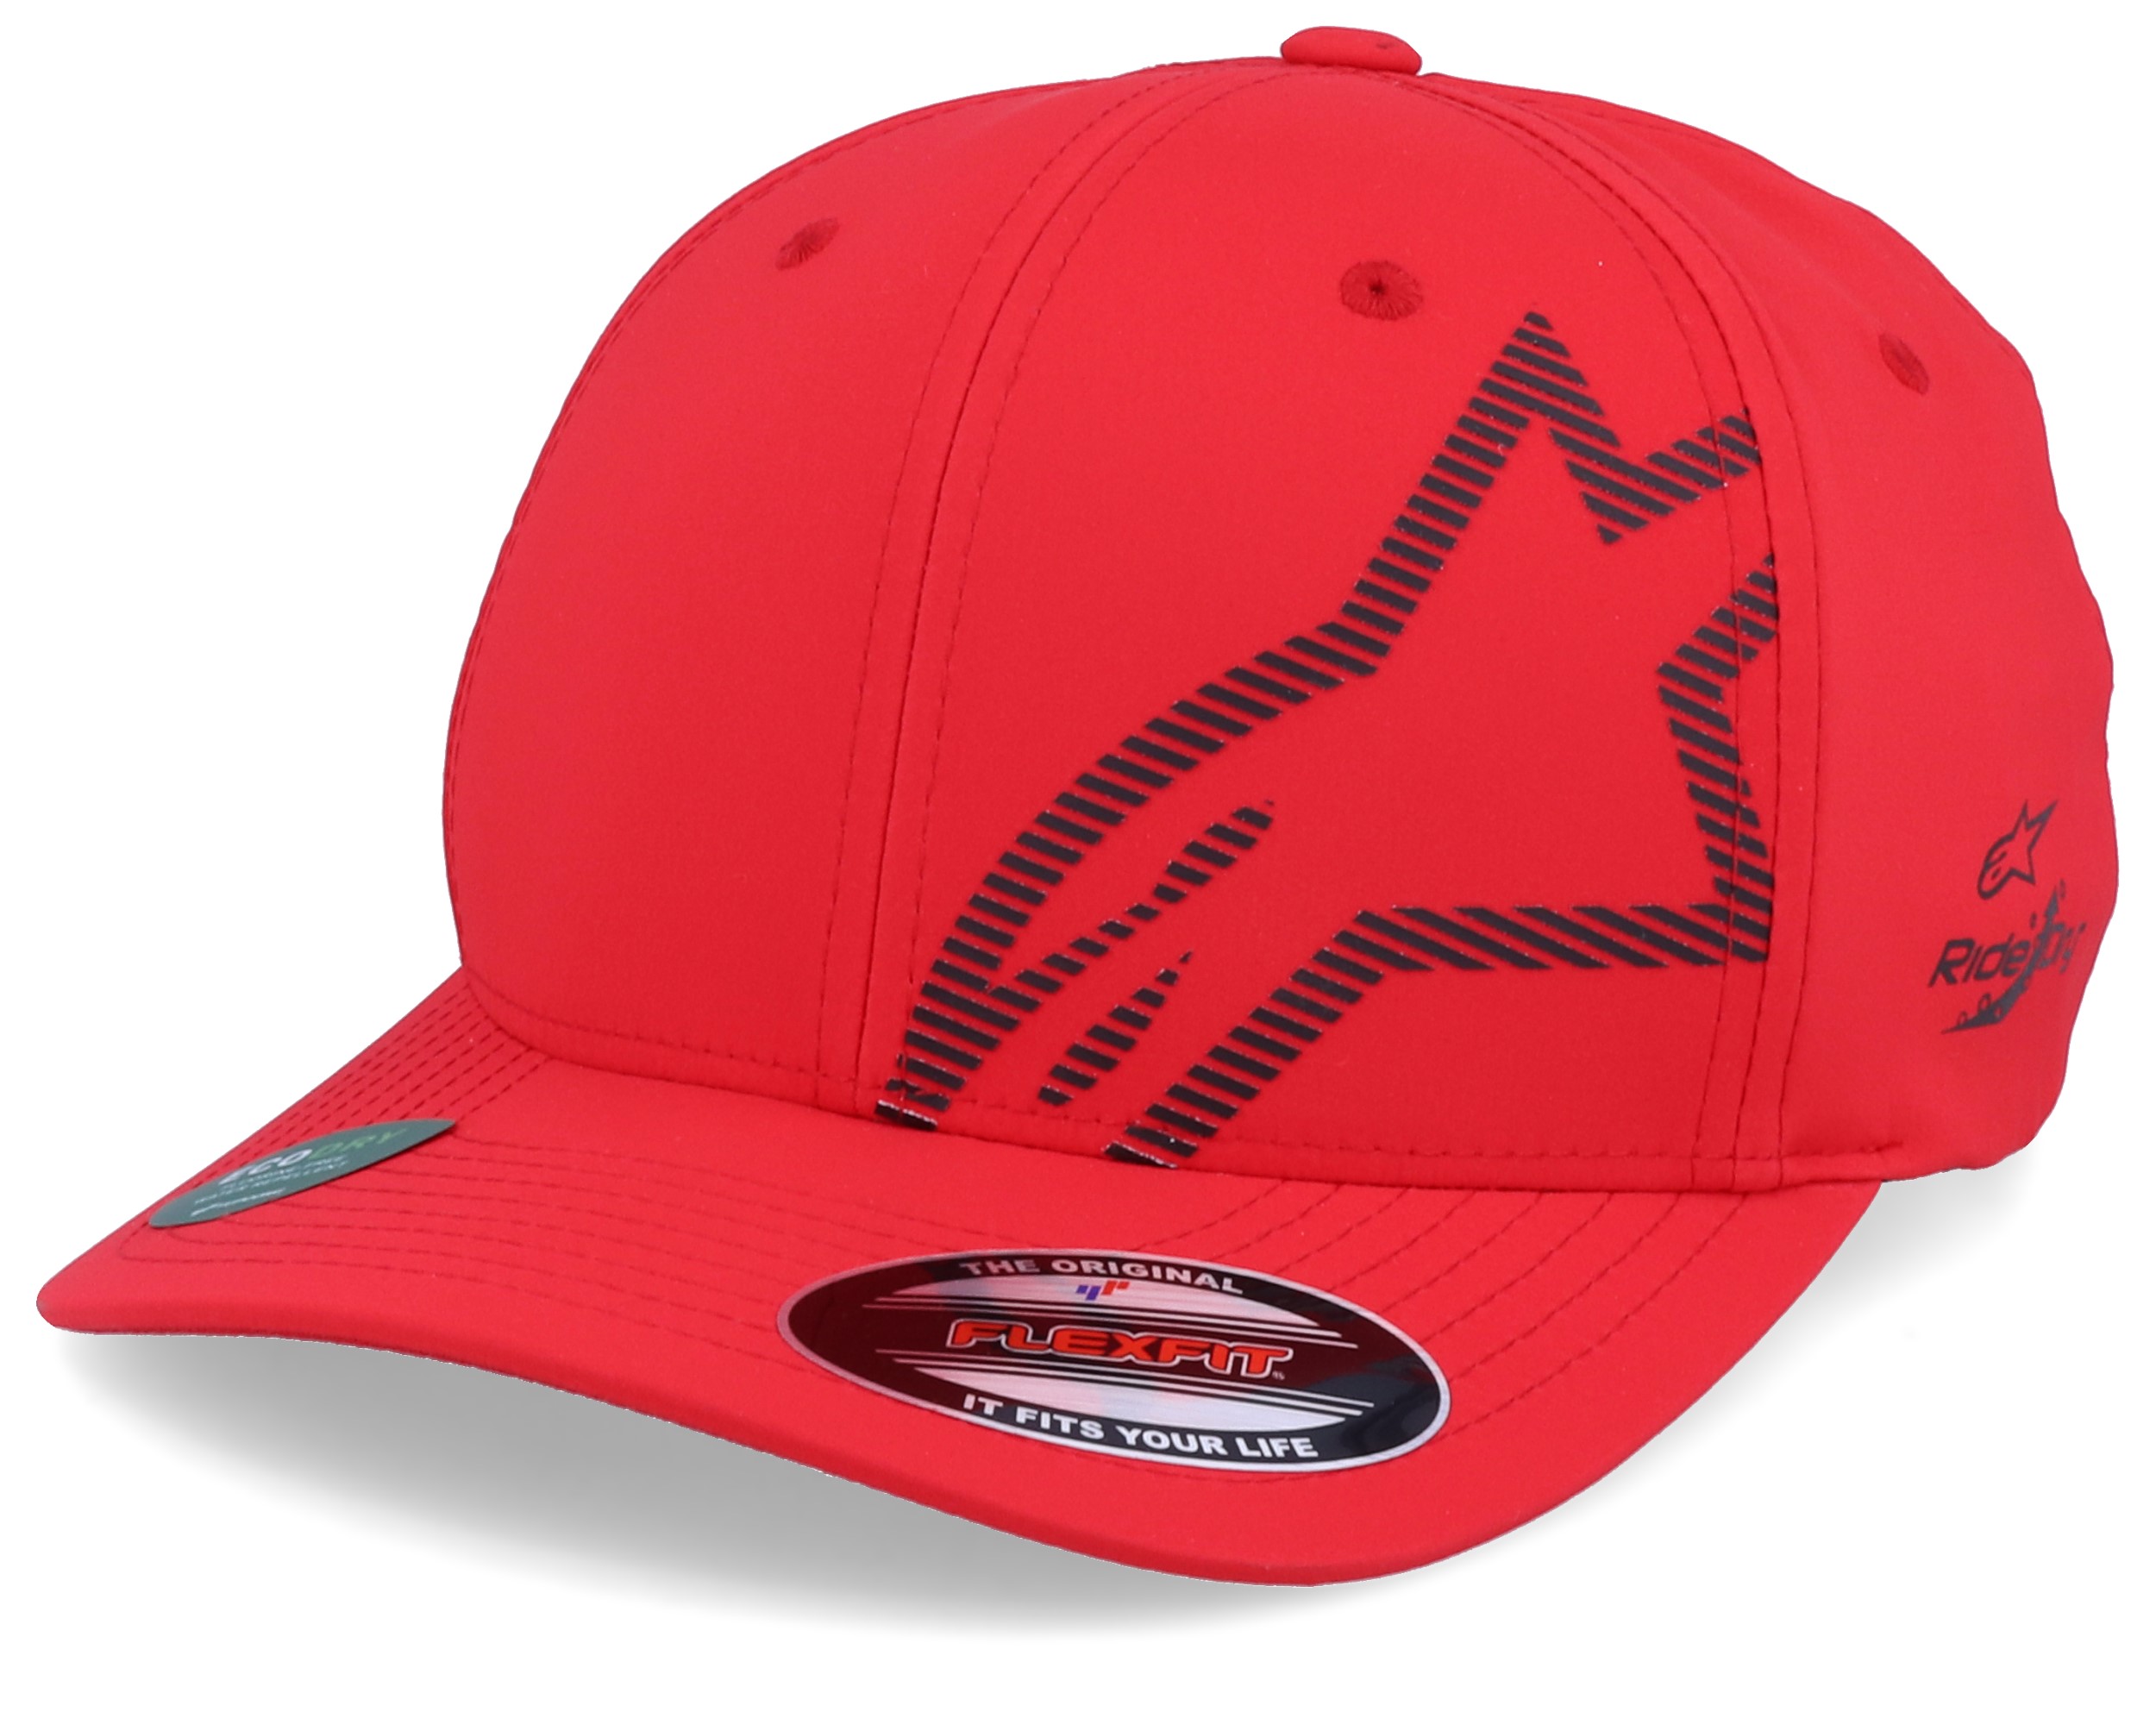 Corp Shift WP Tech Red/Black Flexfit - Alpinestars cap